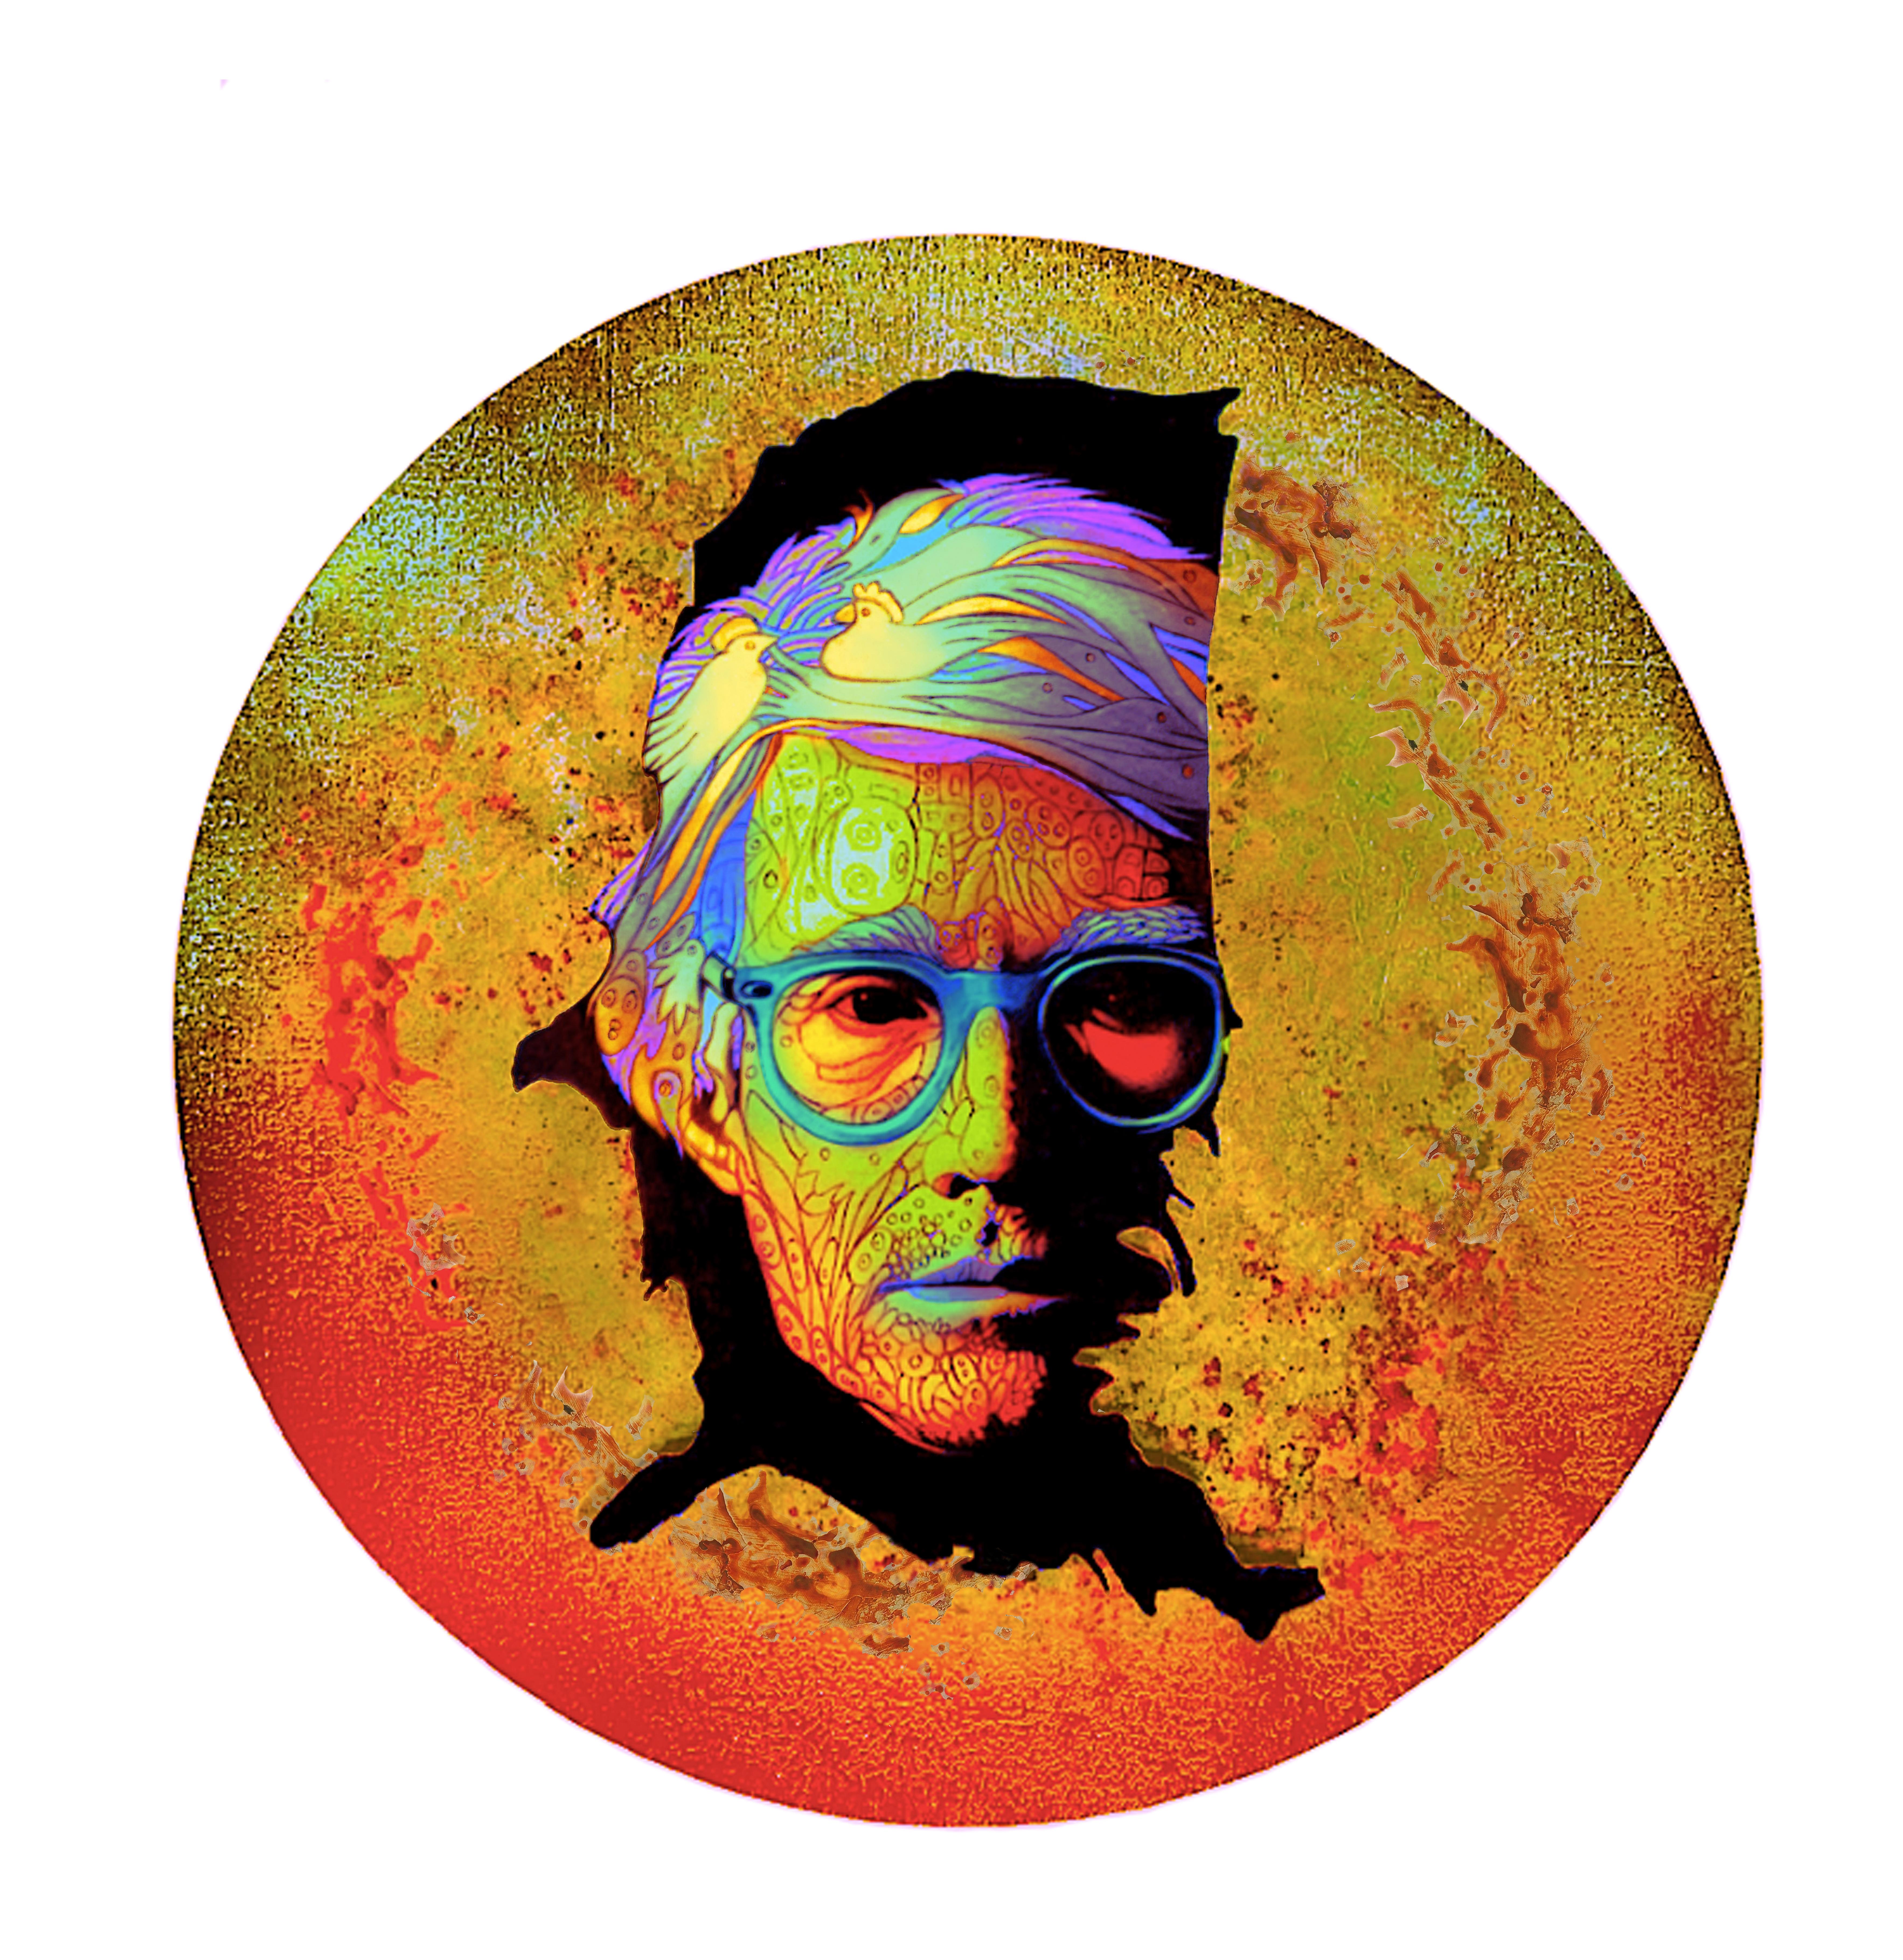 Pablo Caviedes Portrait Painting - Andy Warhol's portrait "On The Map" - Digital Art print